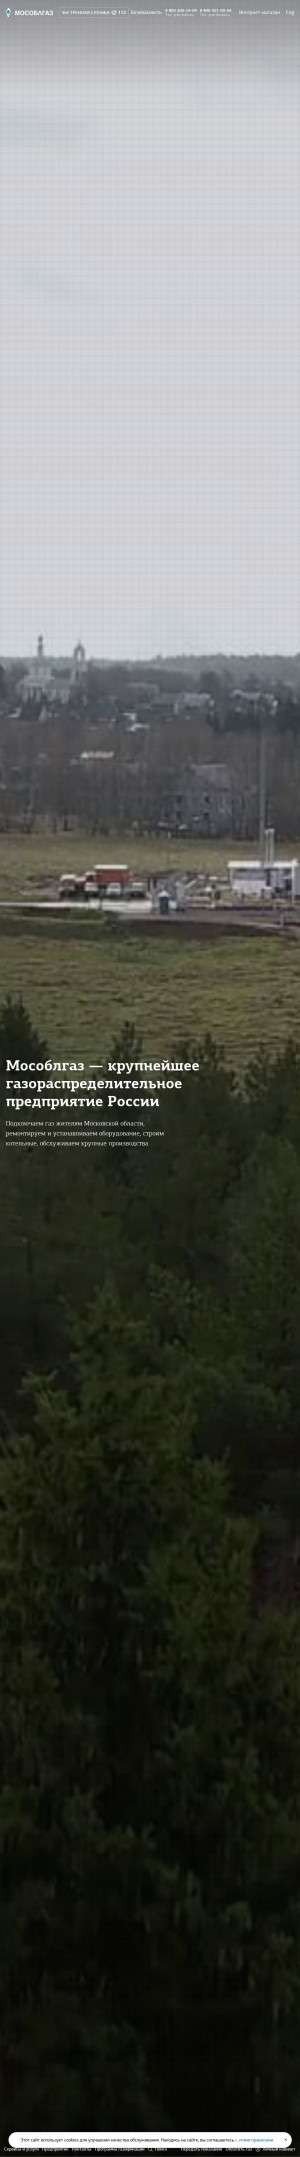 Предпросмотр для www.mosoblgaz.ru — Мособлгаз